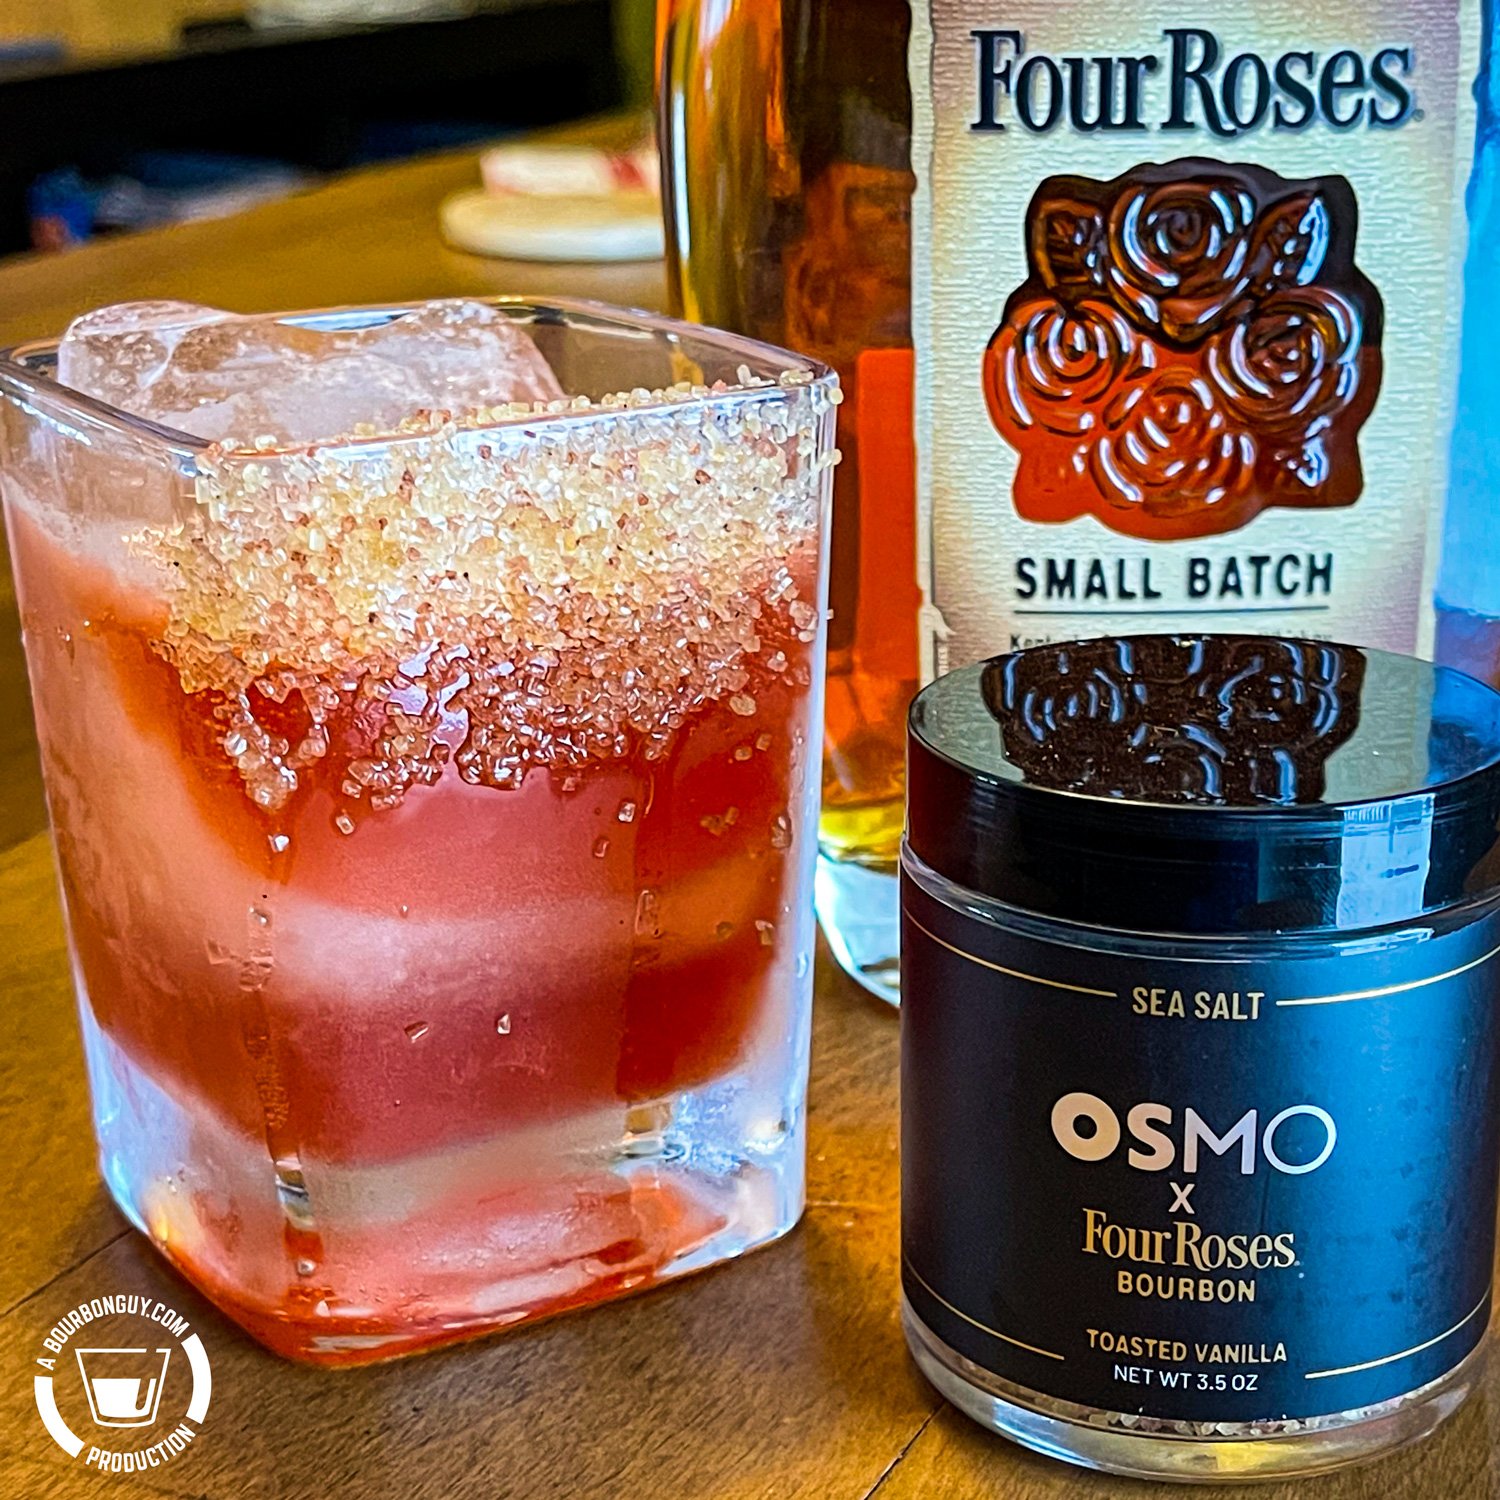 OSMO x Four Roses Toasted Vanilla Bourbon Salt